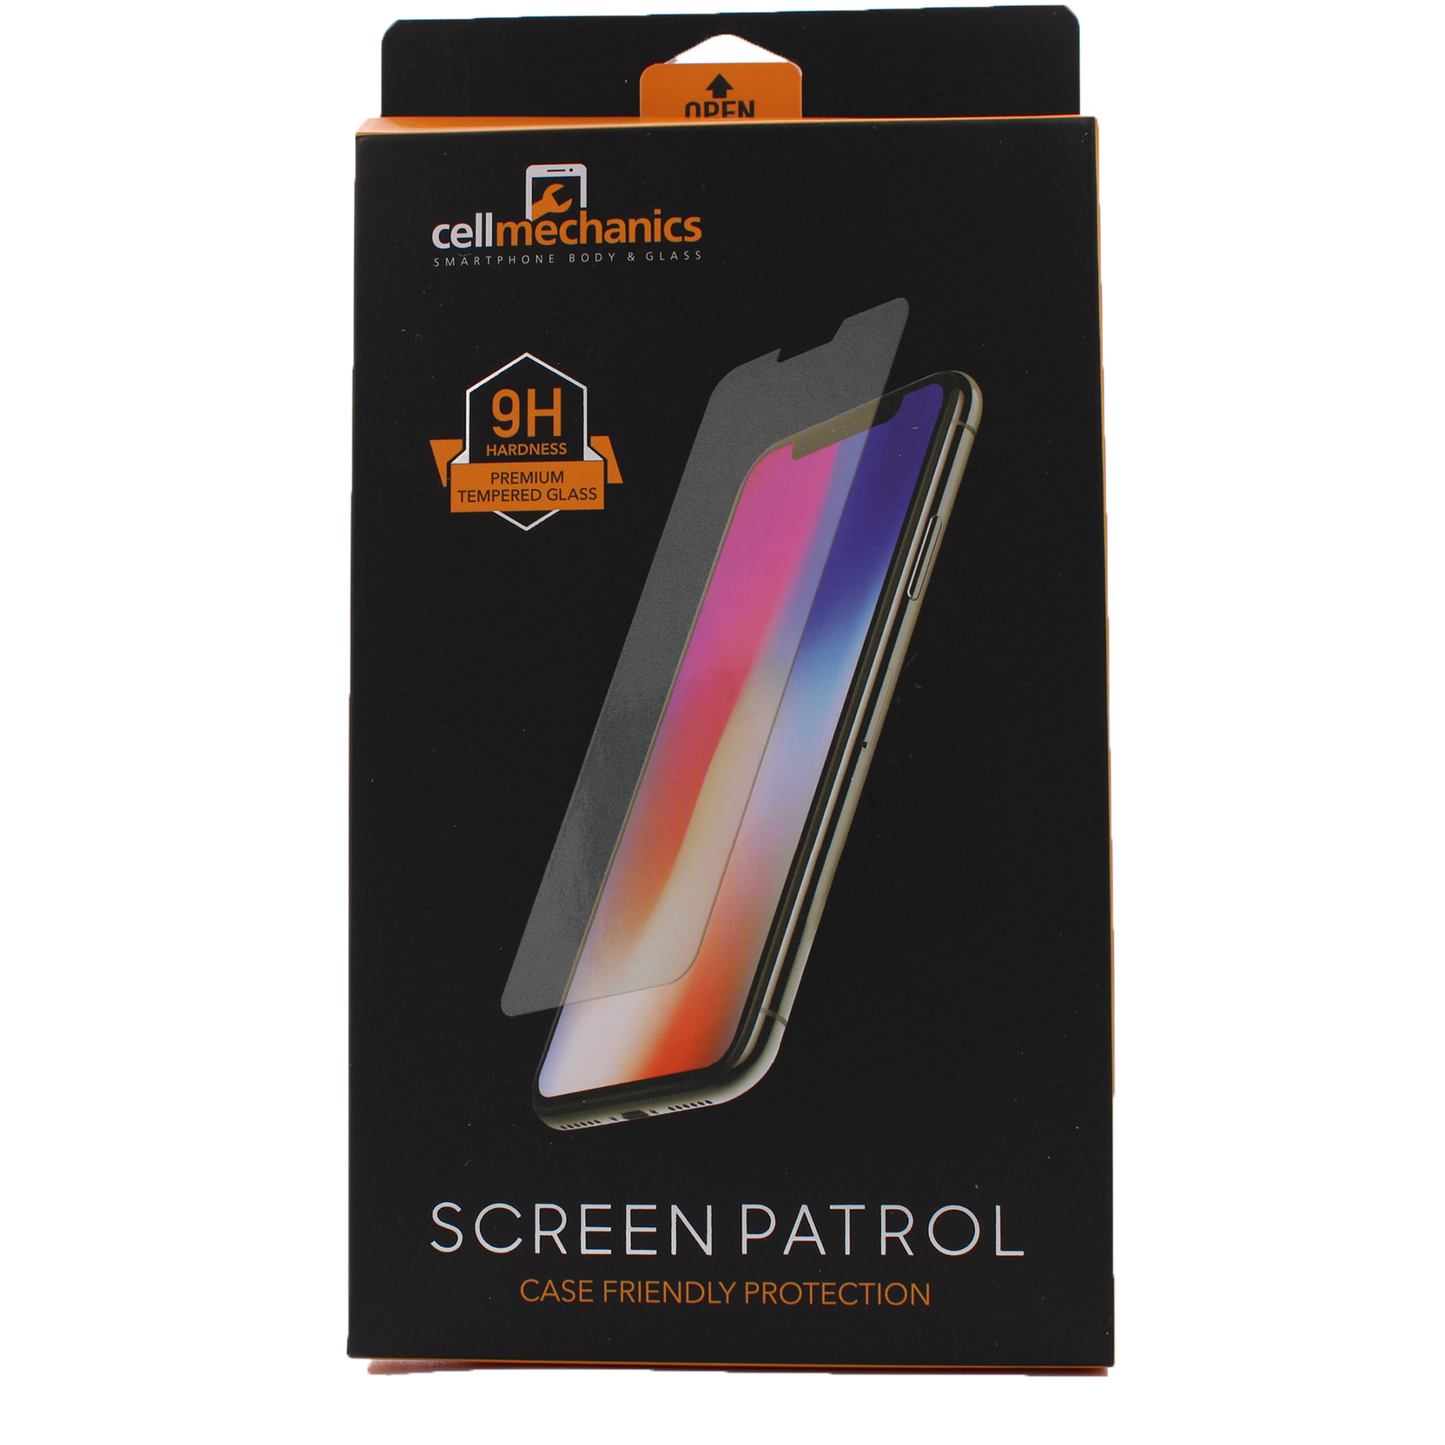 Samsung A10e Screen Patrol Tempered Glass